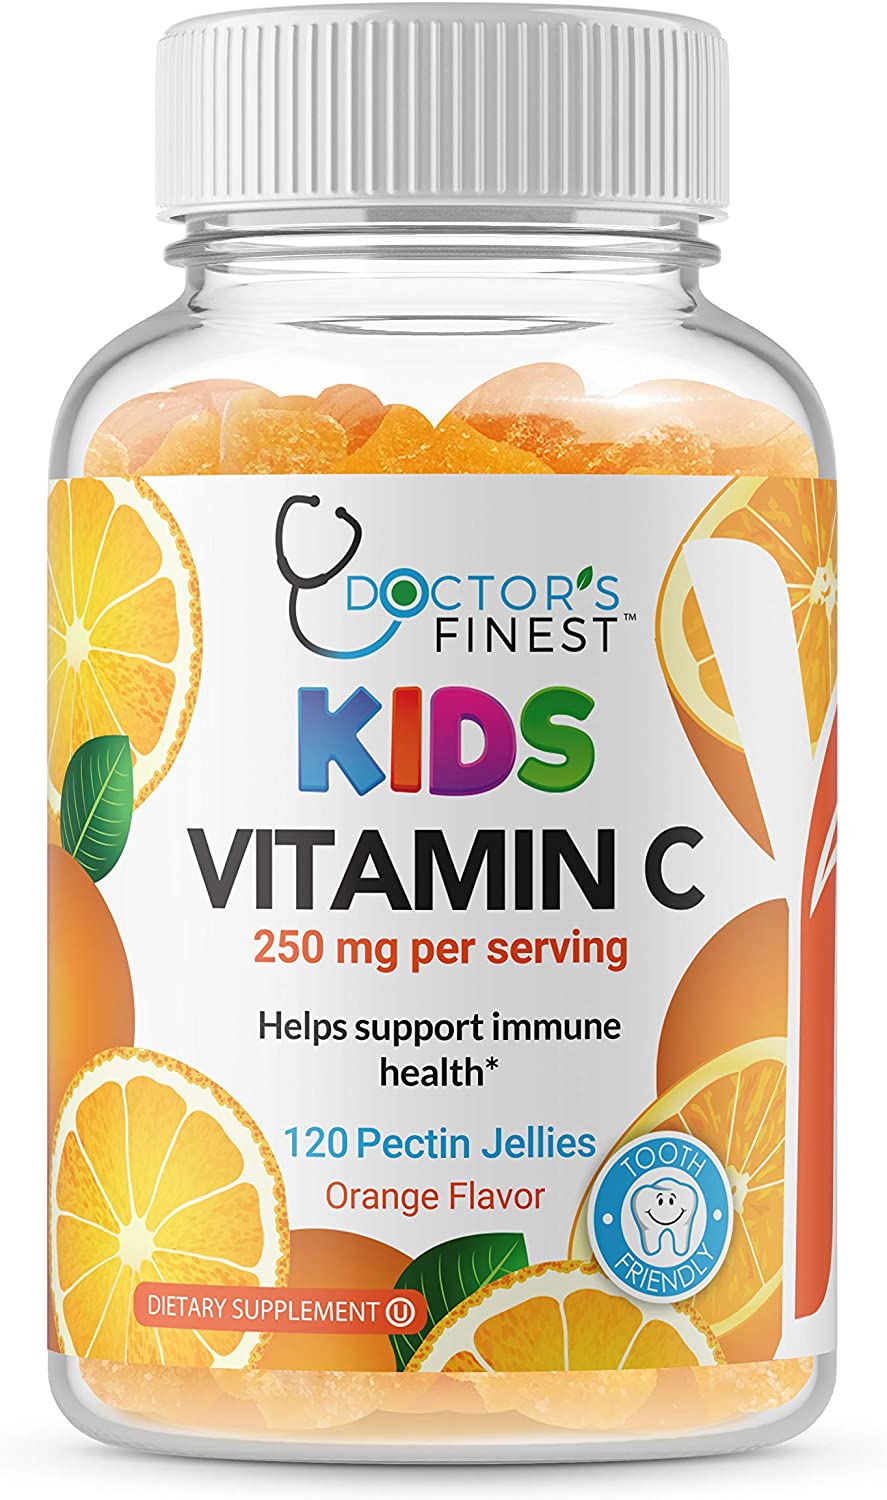 Doctors Finest Vitamin C Gummies for Kids